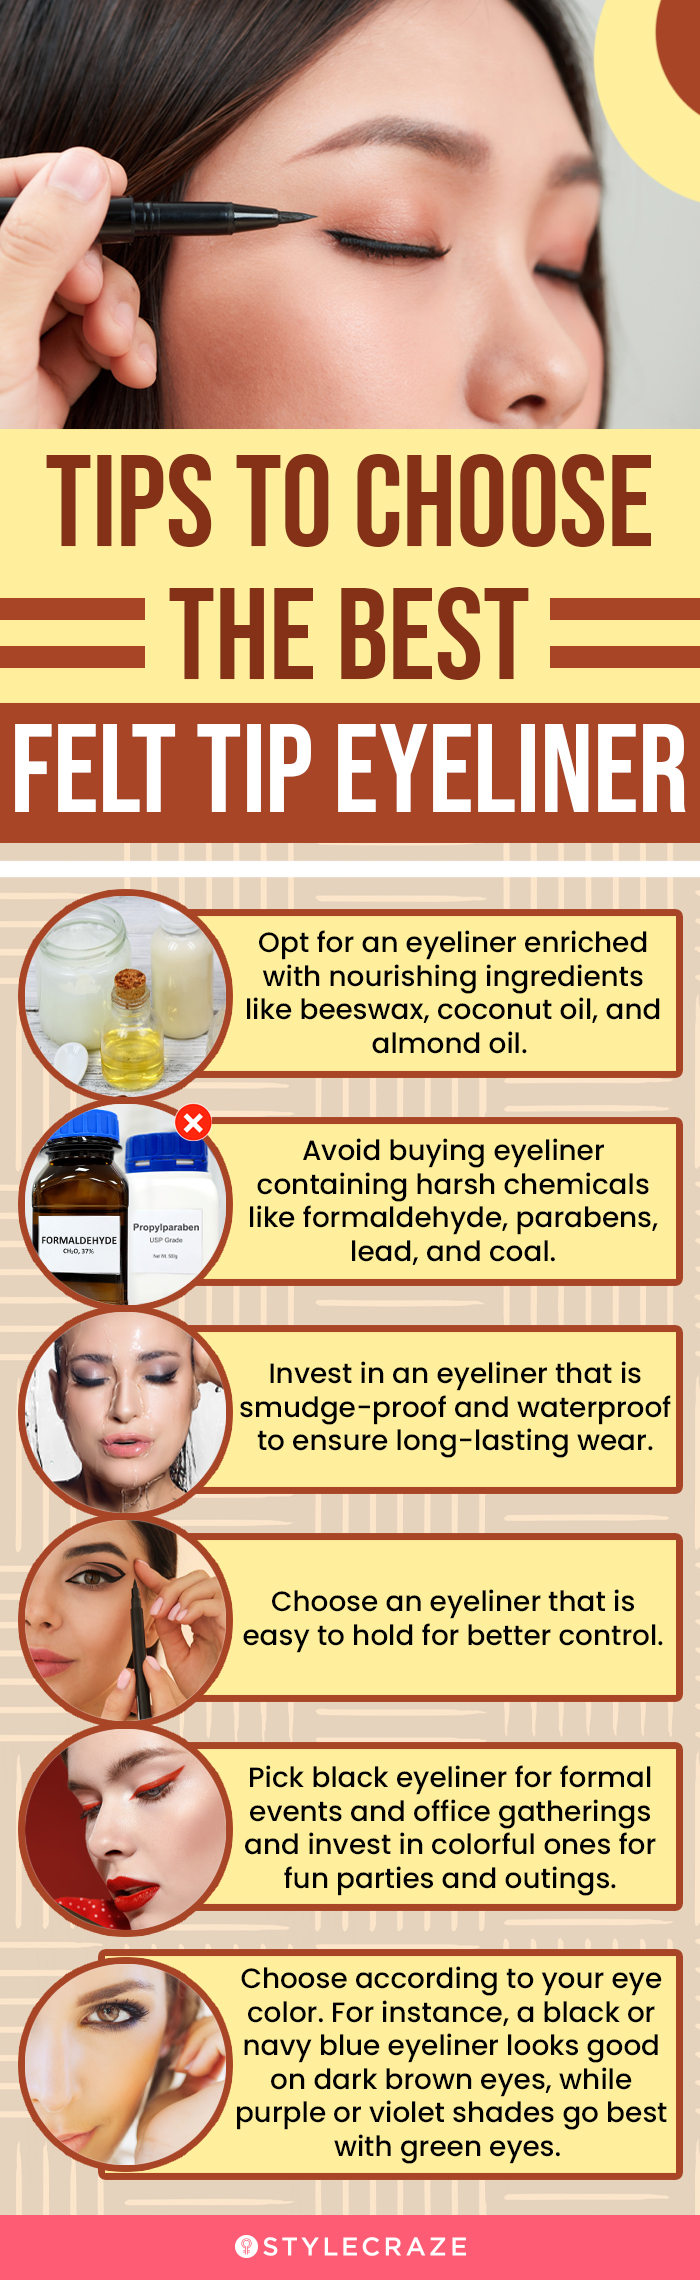 Tips To Choose The Best Felt Tip Eyeliner (infographic)